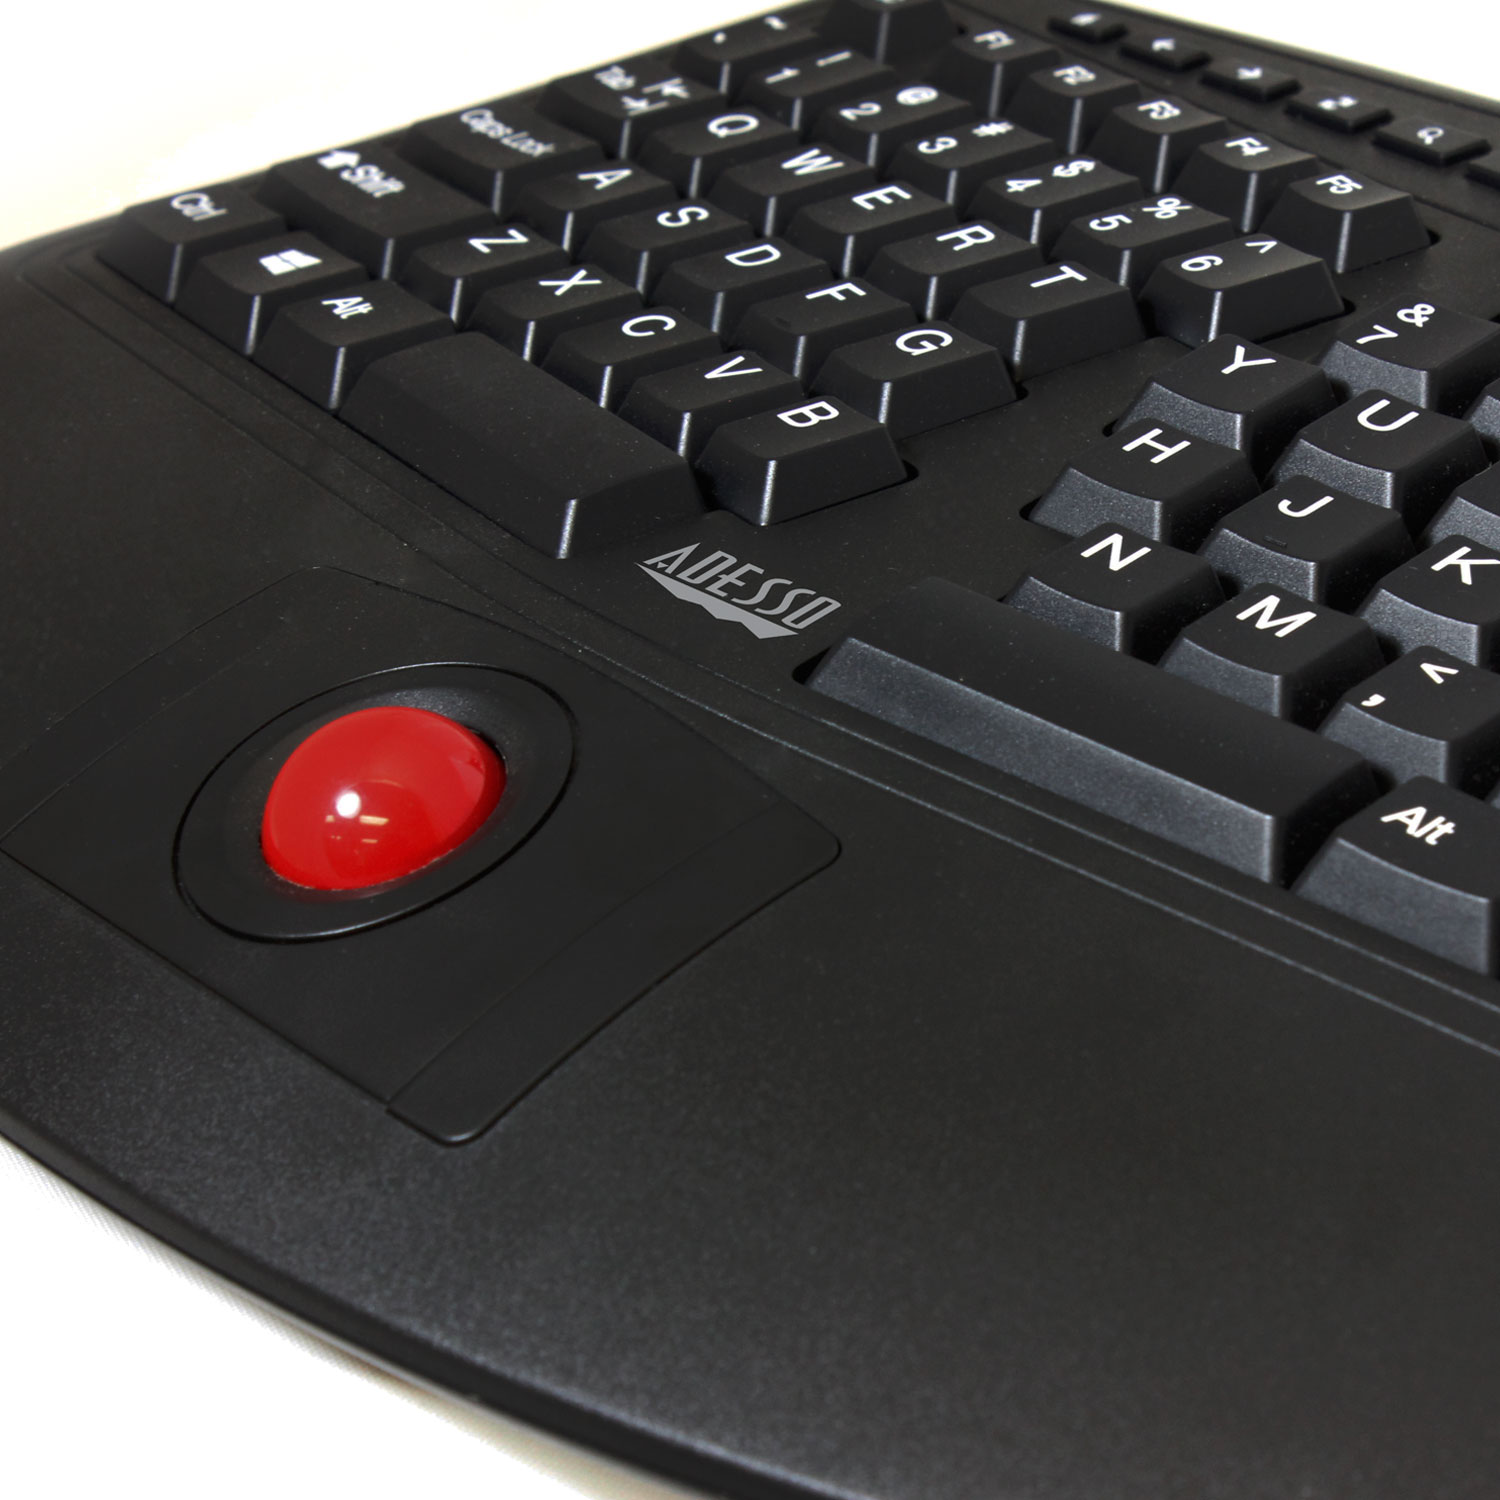 adesso tru-form media 3500 trackball keyboard